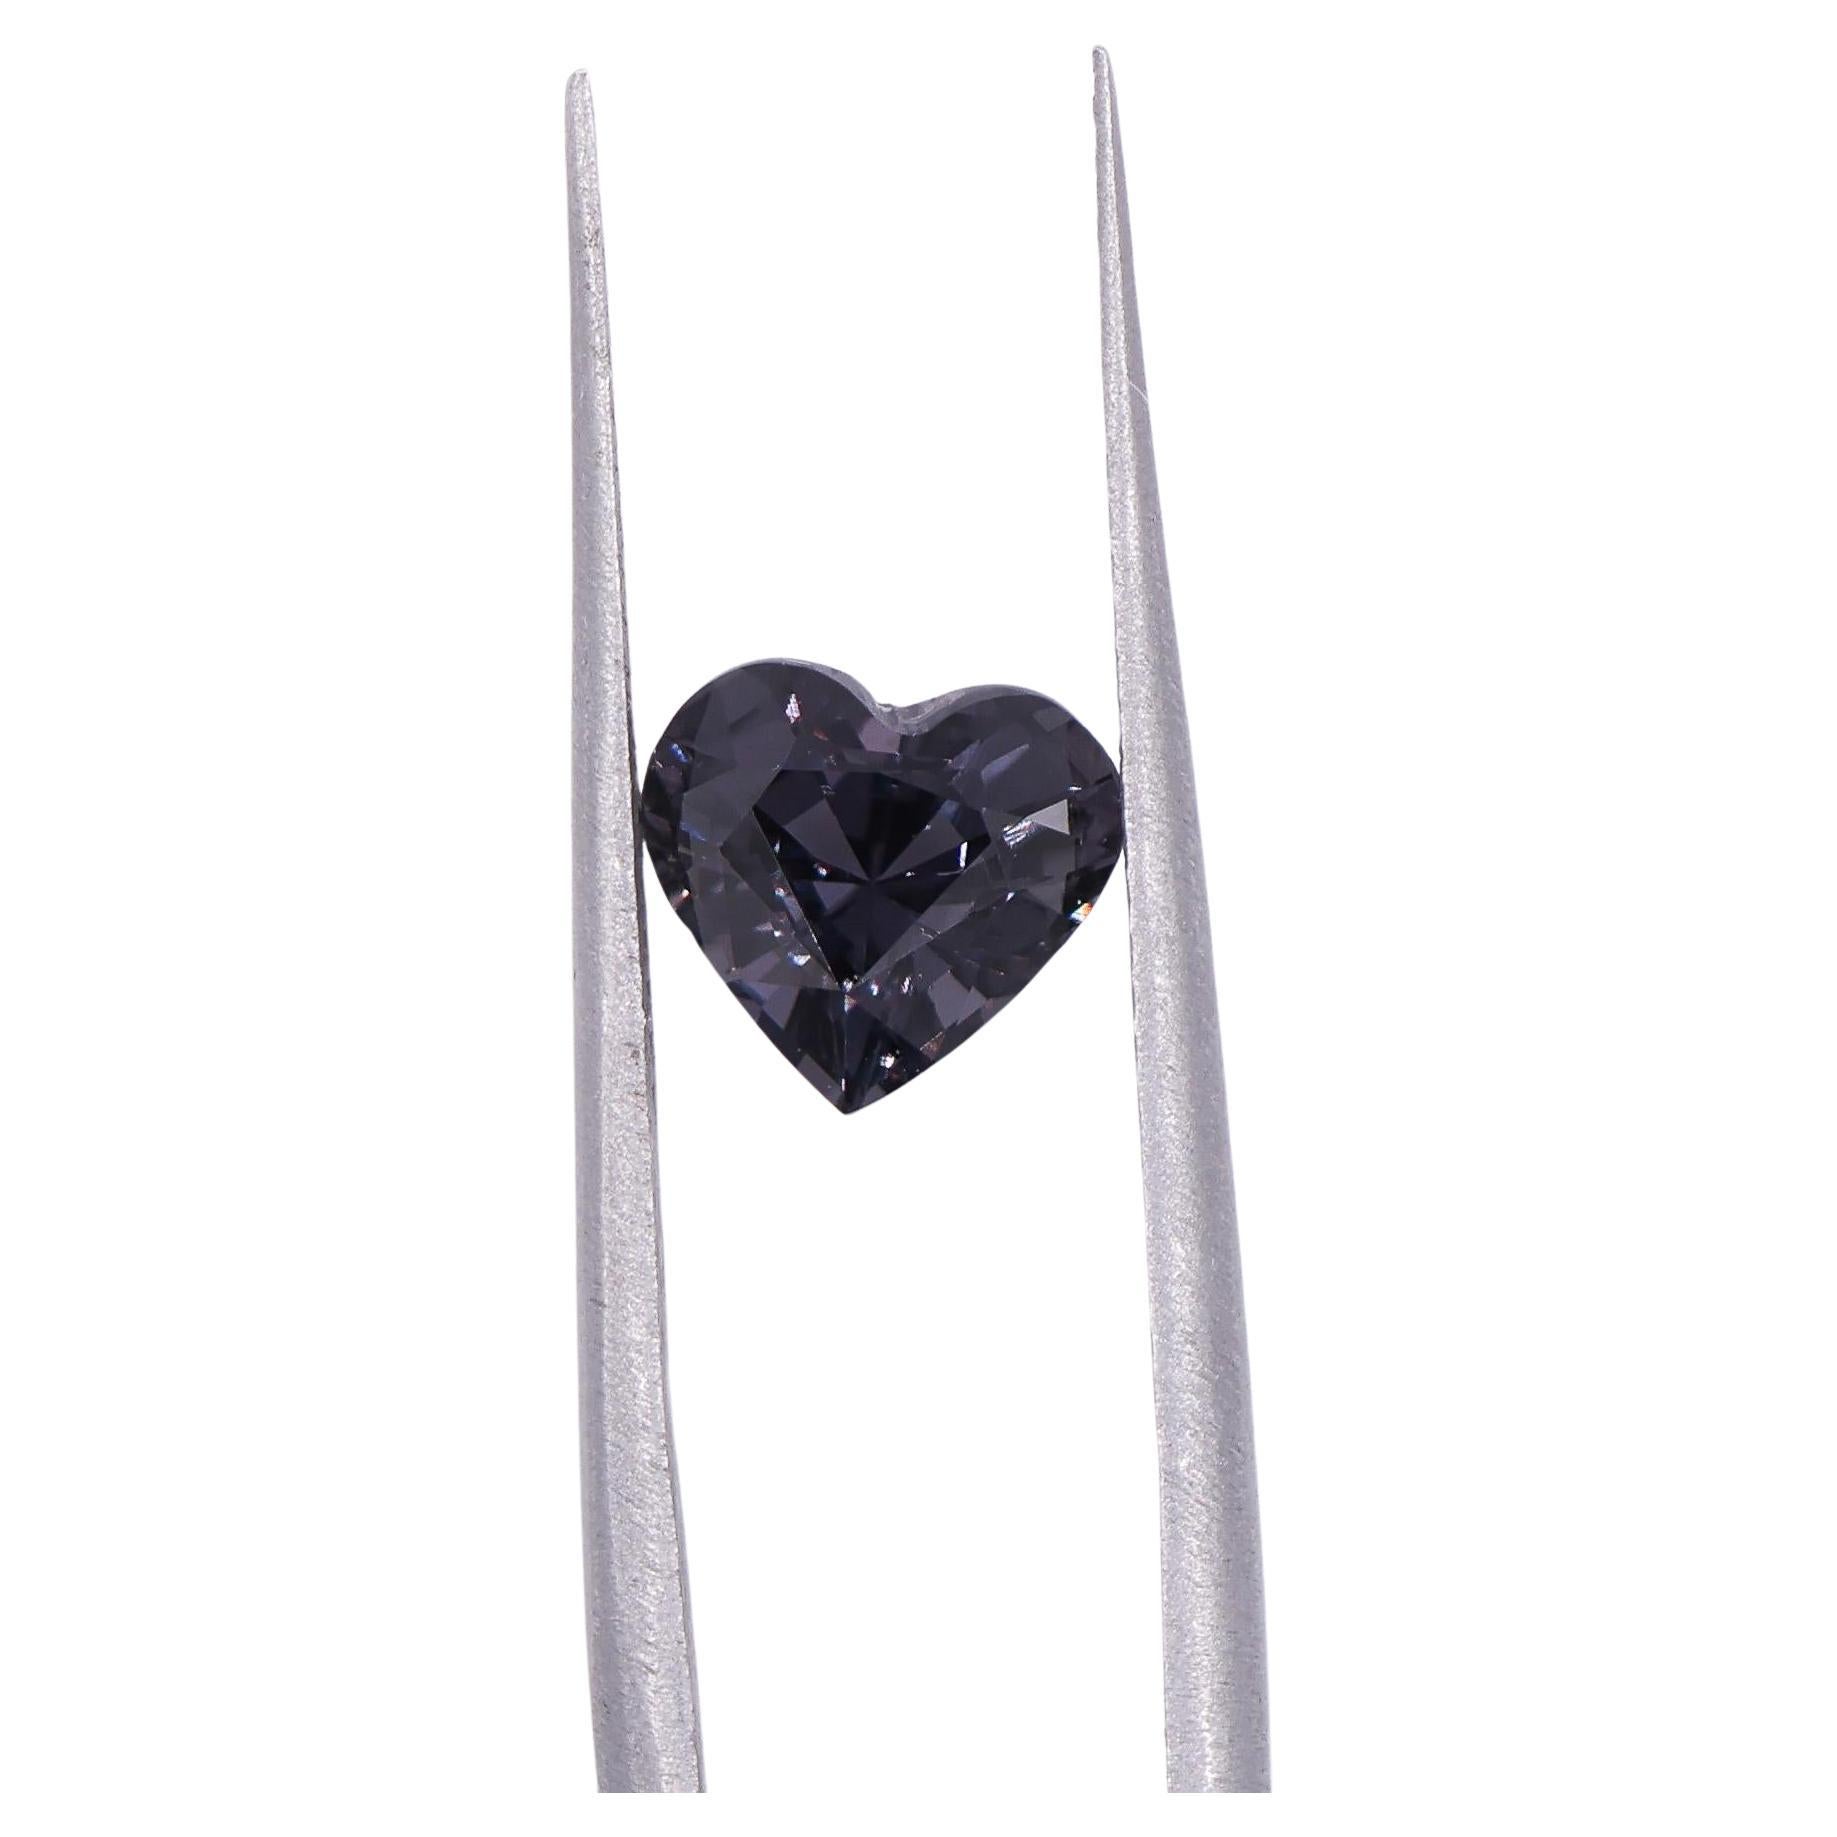 1.59 Carat Grey Spinel Gemstone  Heart Shape 8 x 7mm  Loose Gemstone For Sale